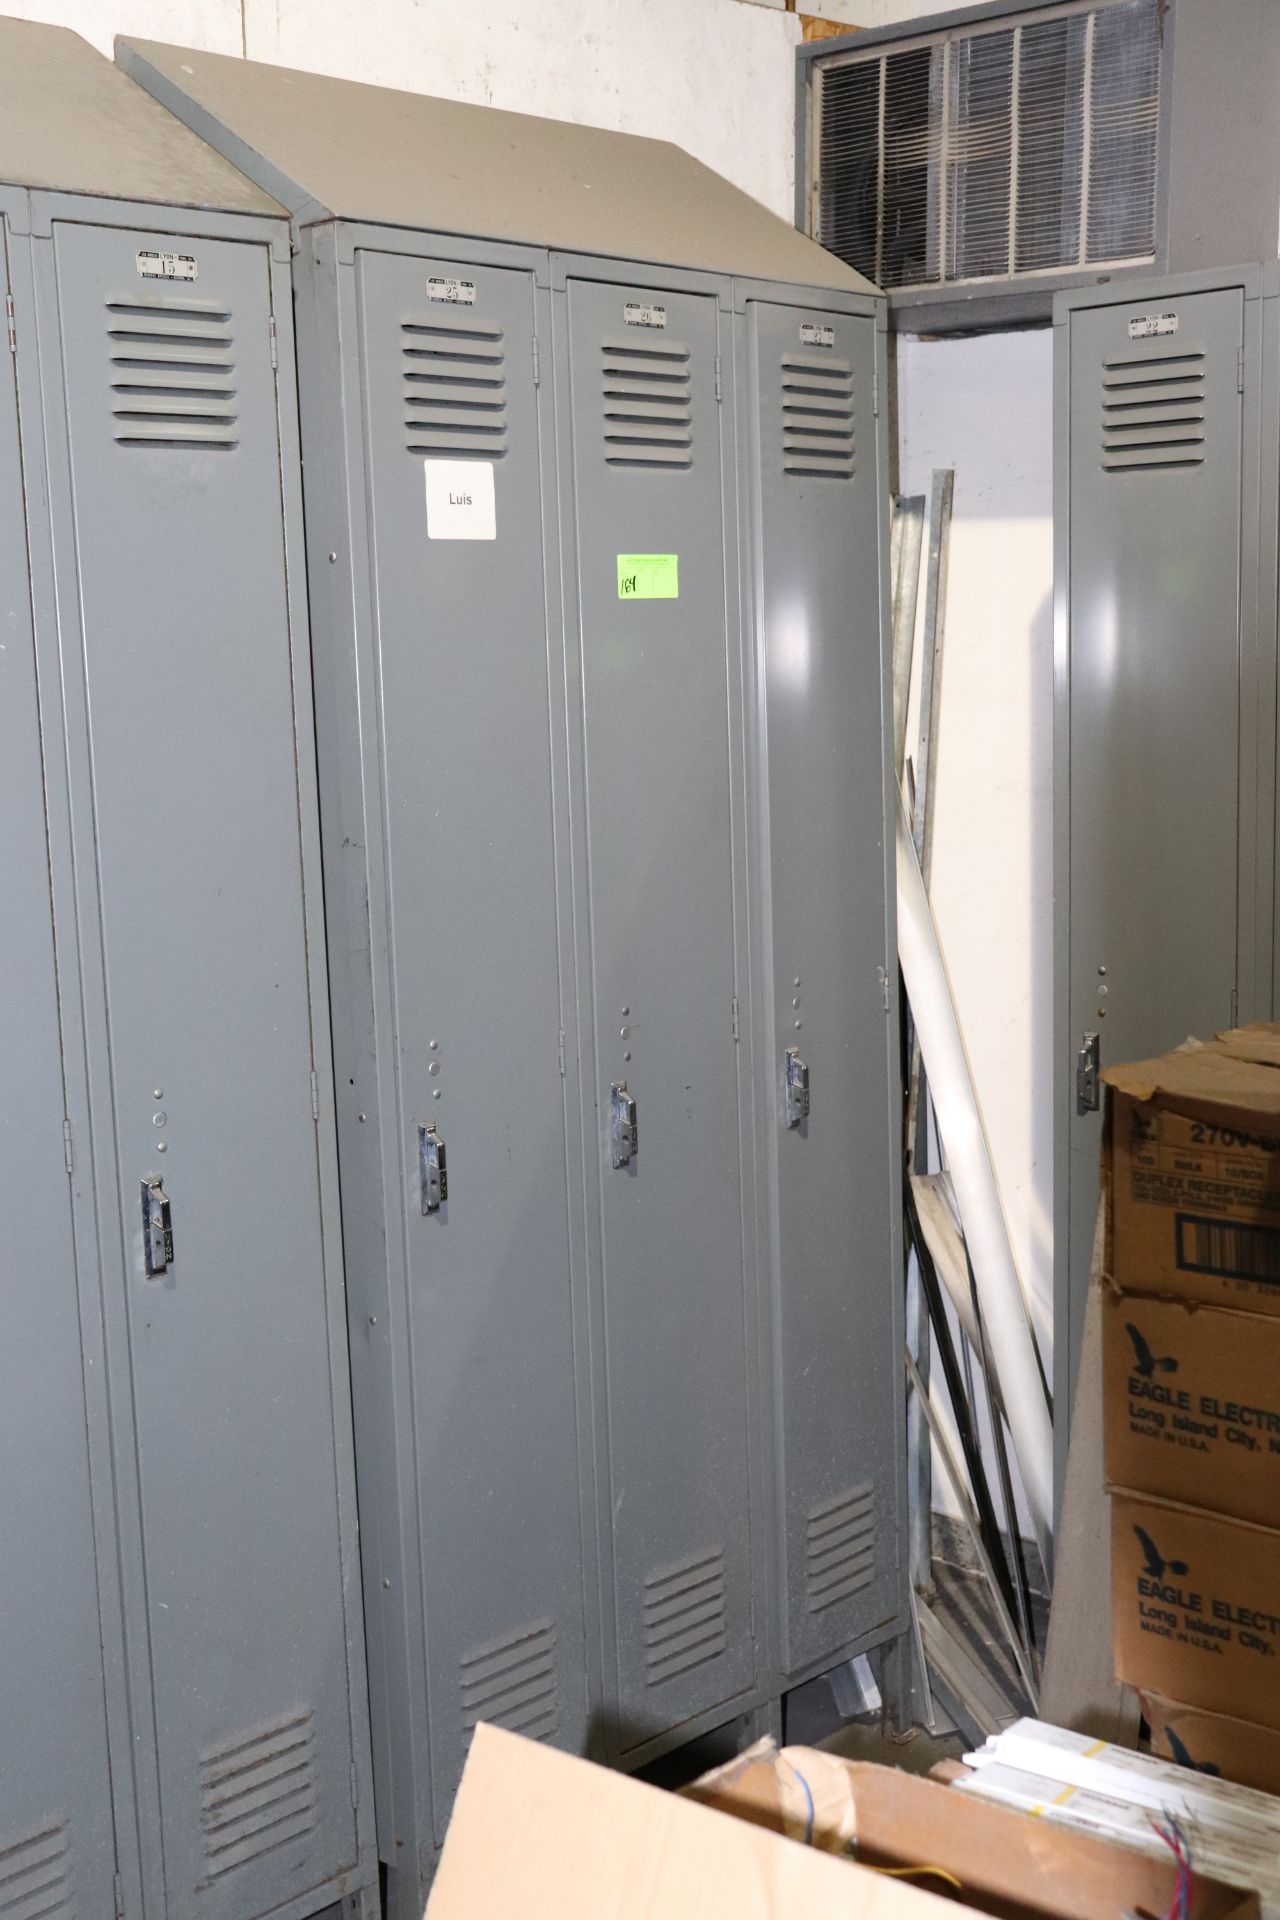 Three lockers